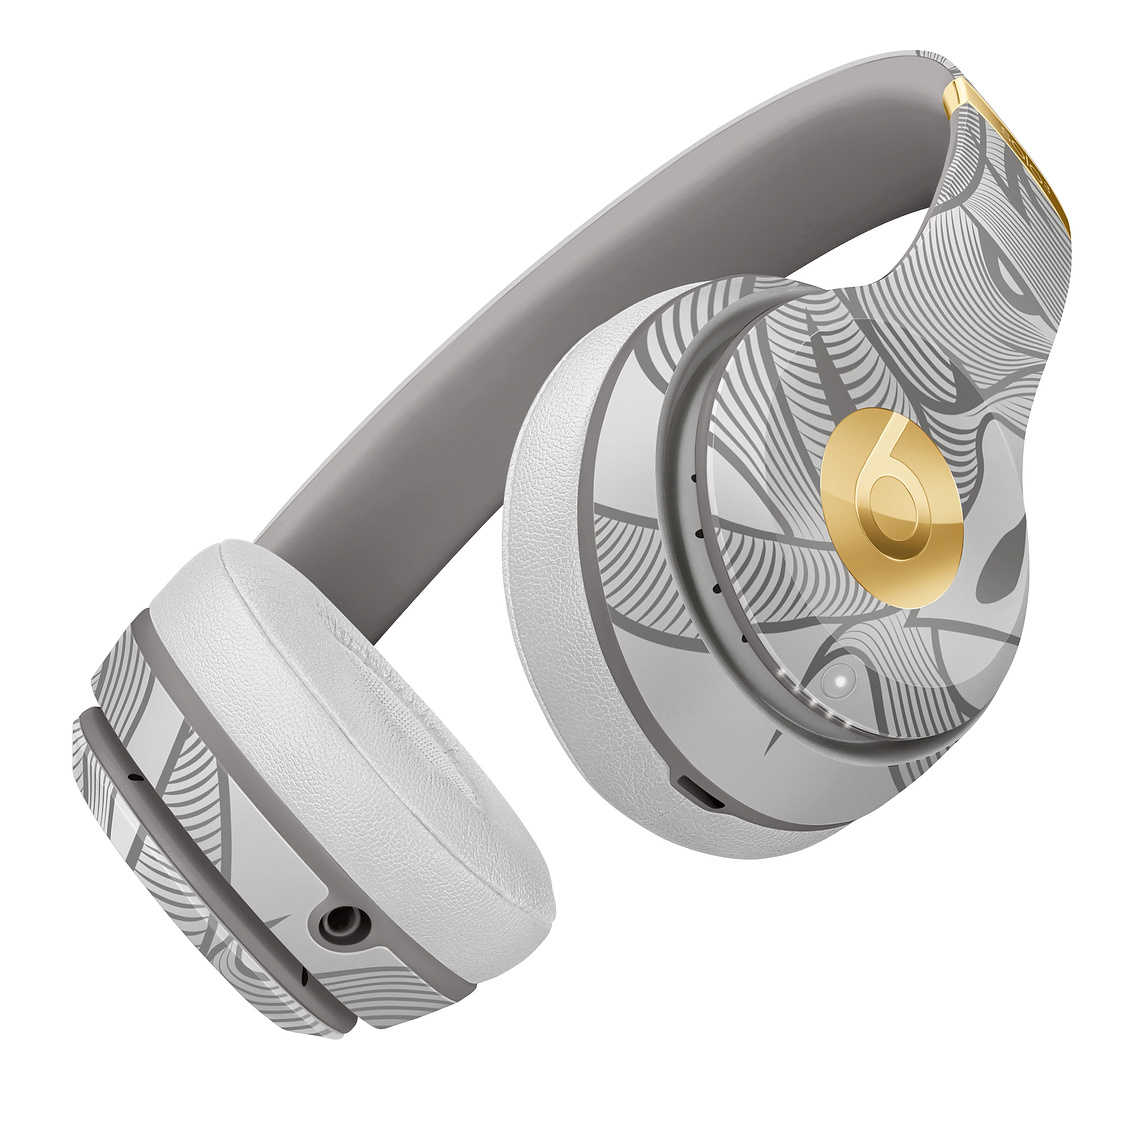 【Beats】Solo3 Wireless 新年限定 銀翼灰 藍牙無線耳罩耳機 ★免運★送透明肩背袋